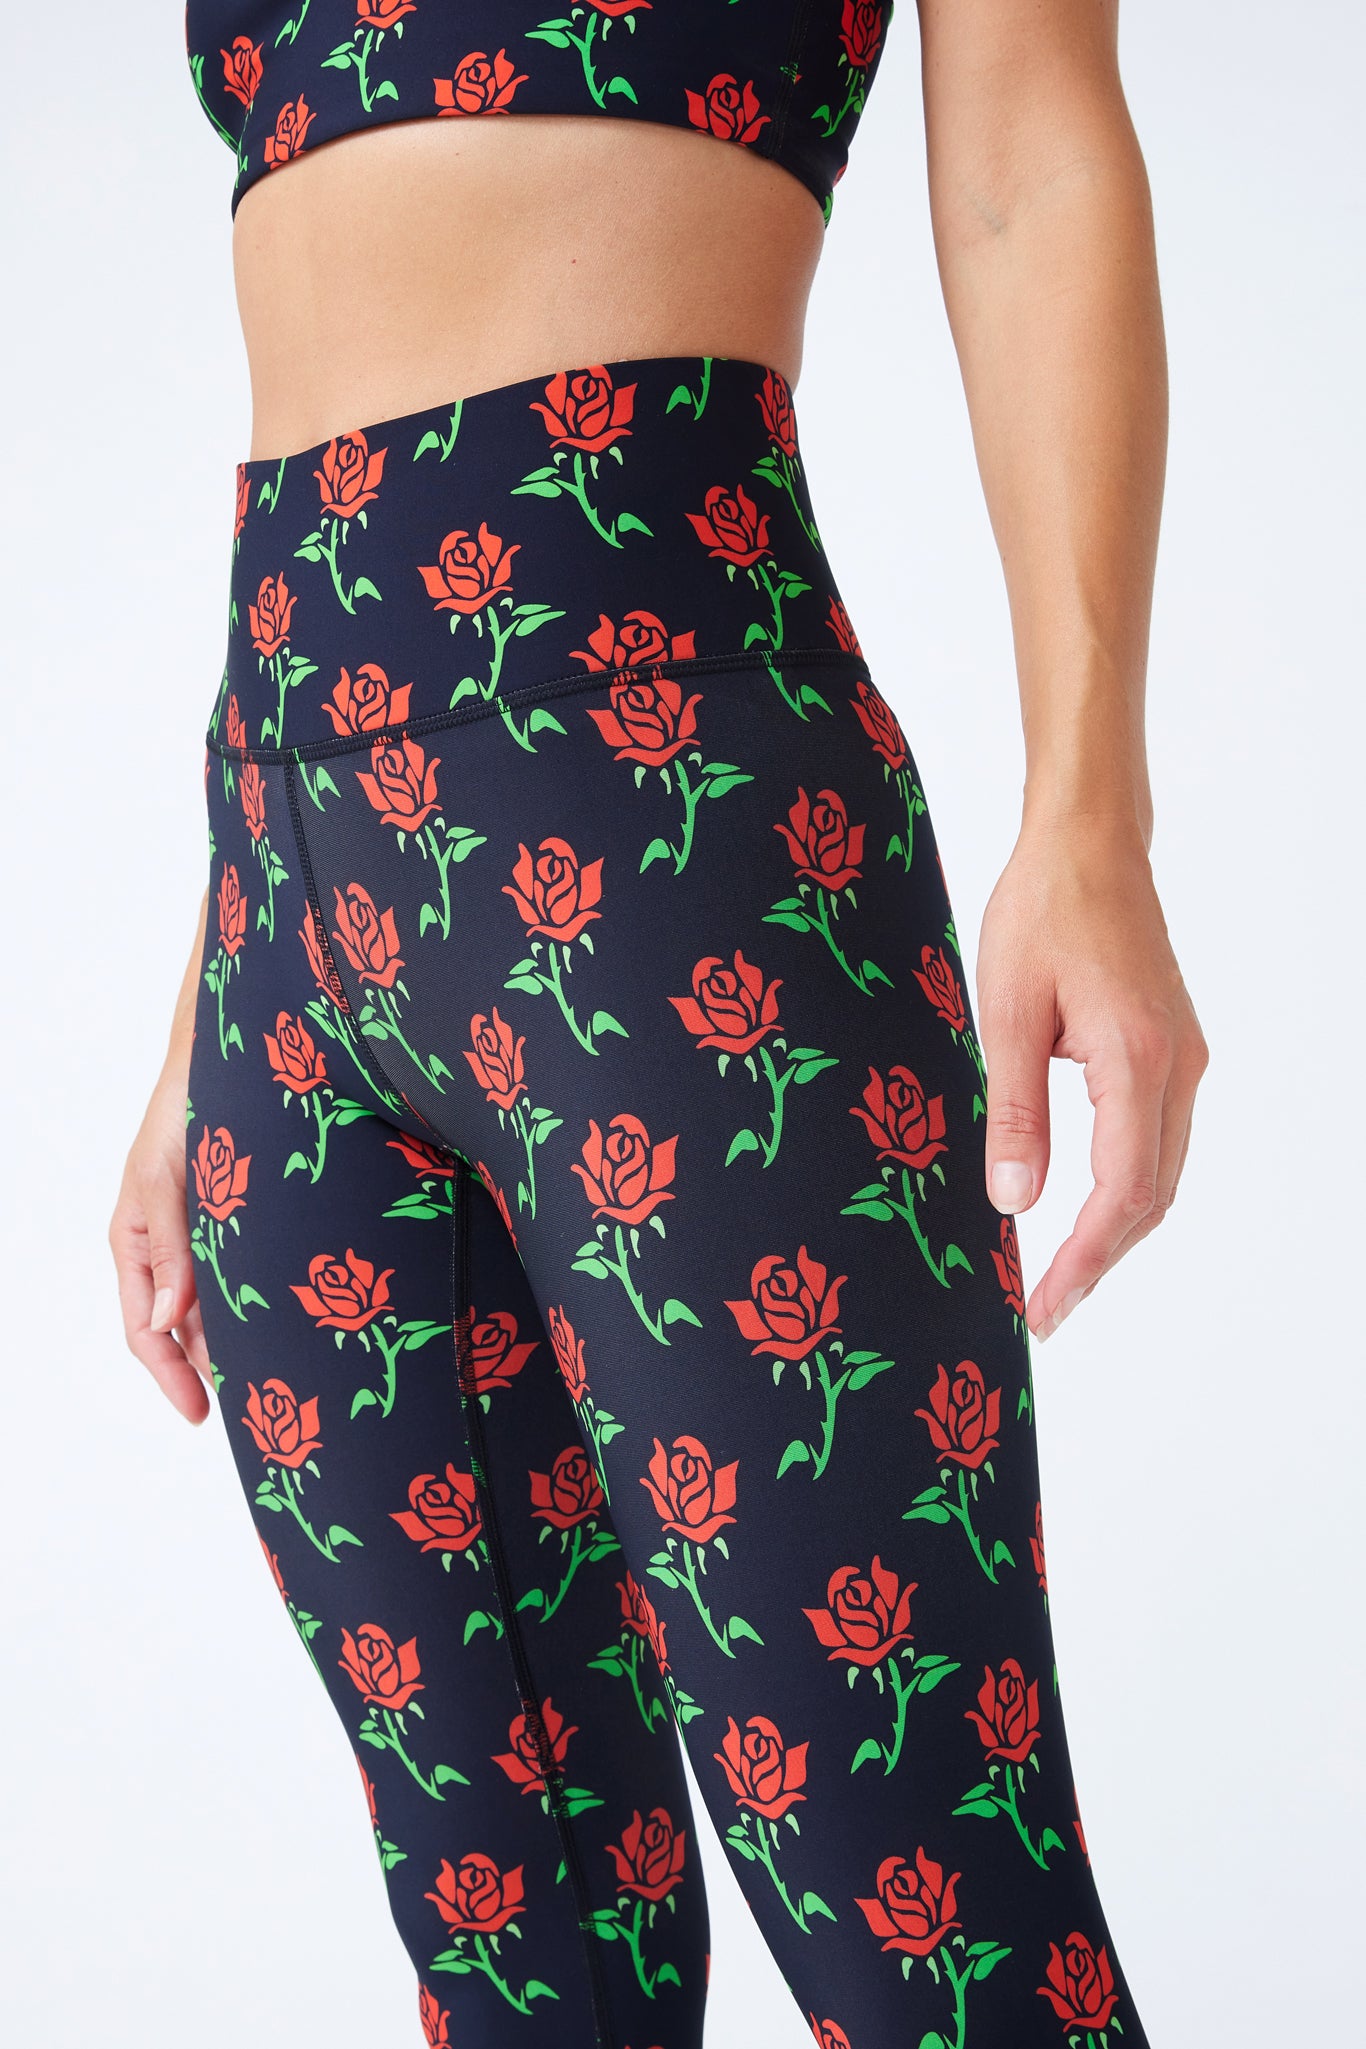 Women's Influential Gym Leggings - Mesa Rose Floral Print